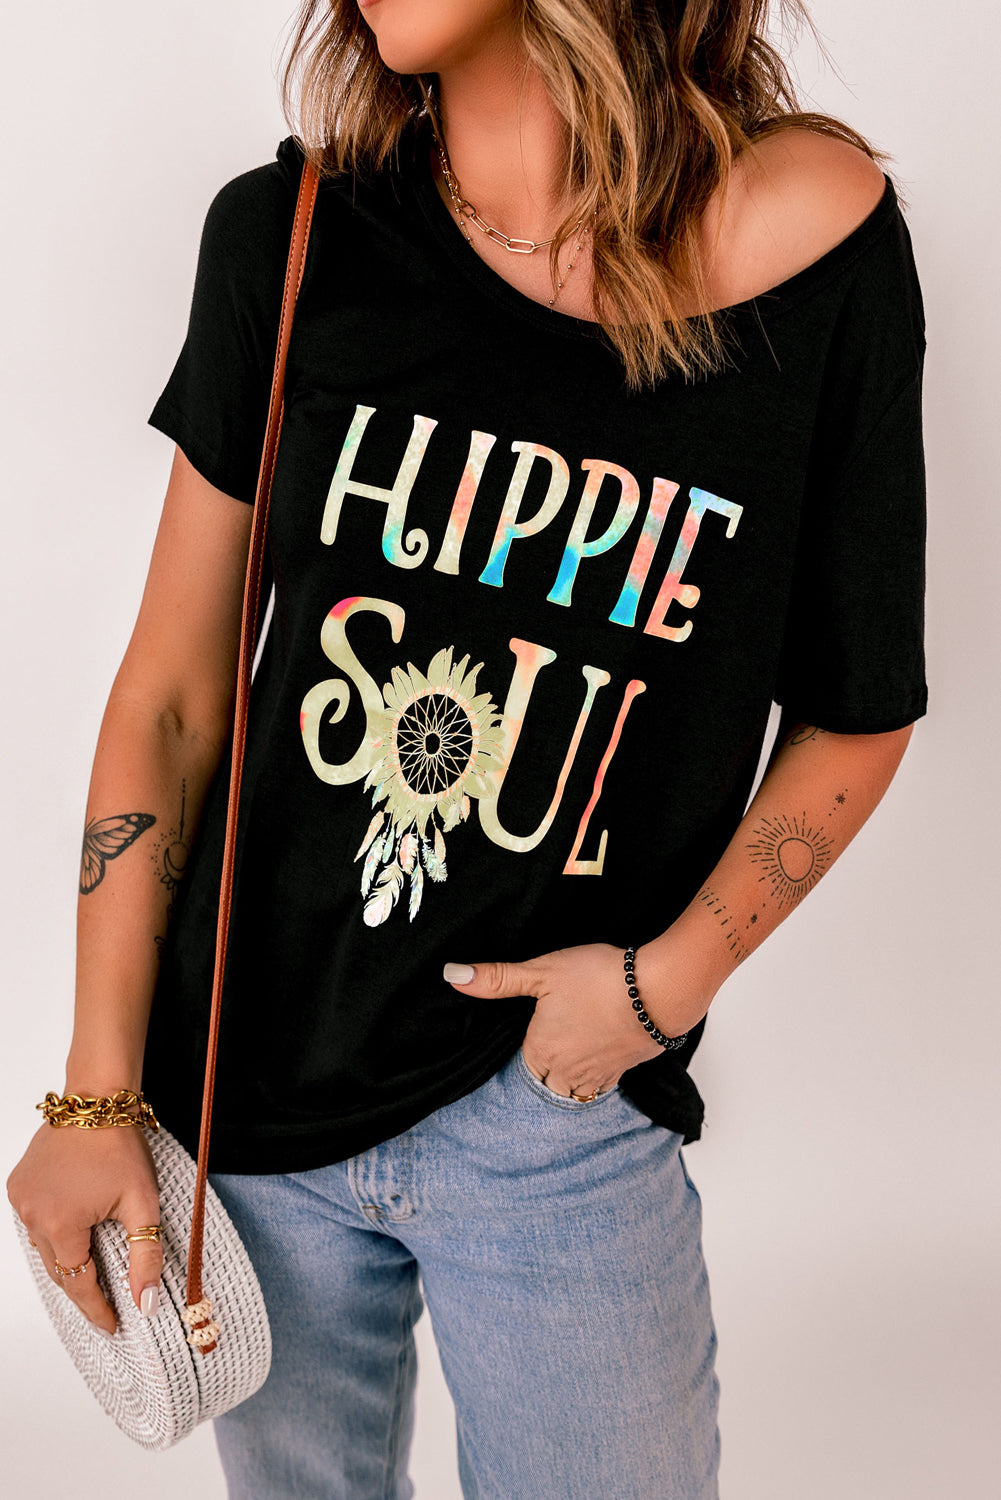 Spirit Wanderer Hippie Soul Tee